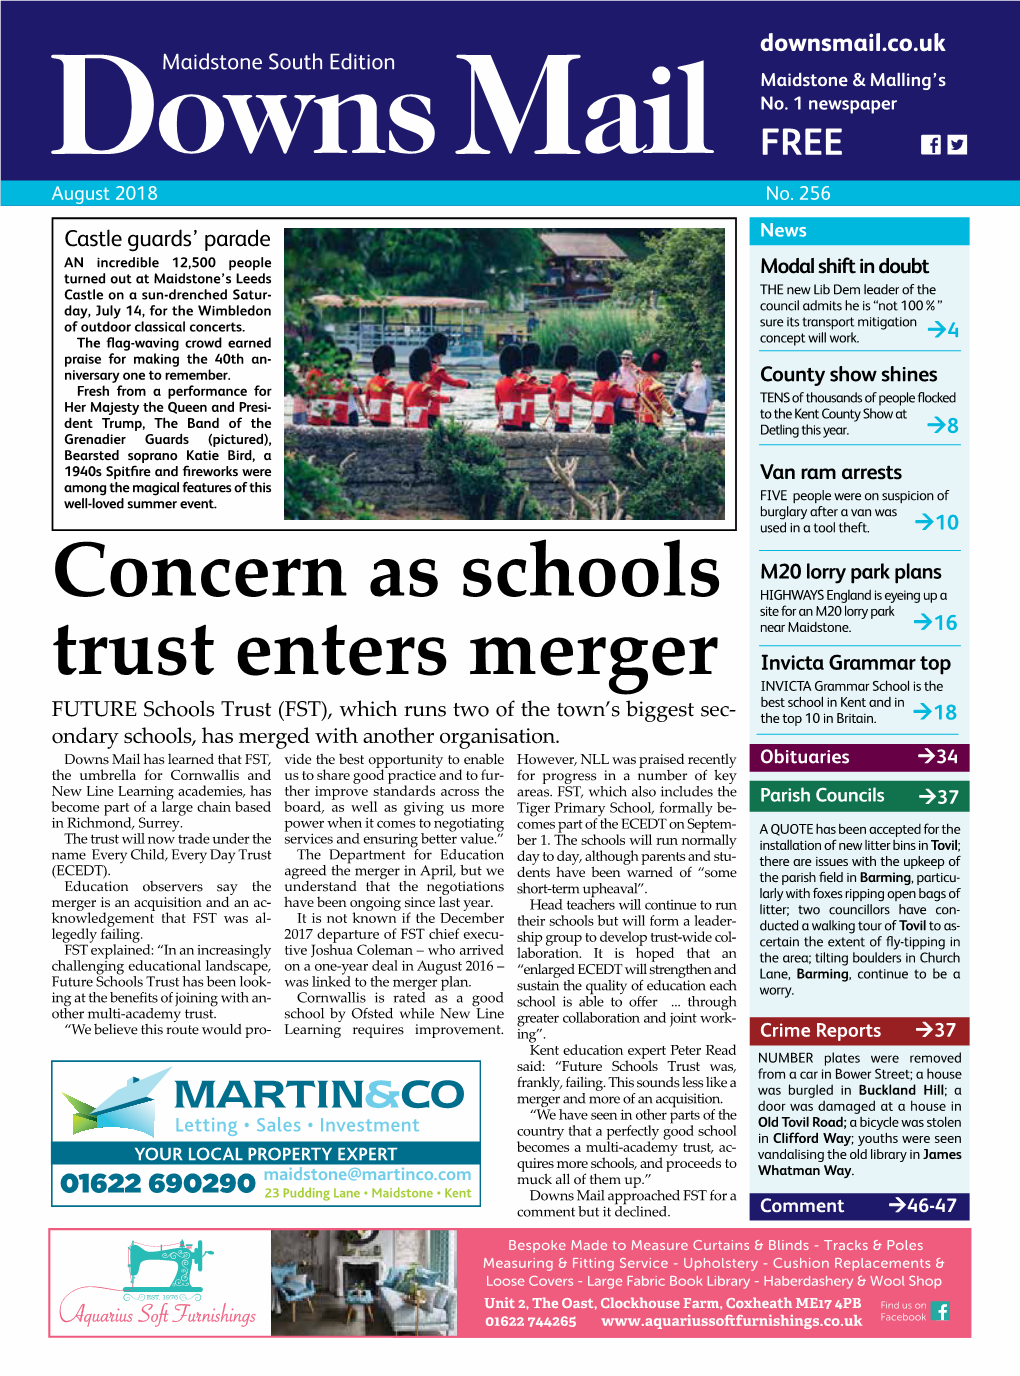 'Flouts Council's Local Plan' Concern As Schools Trust Enters Merger